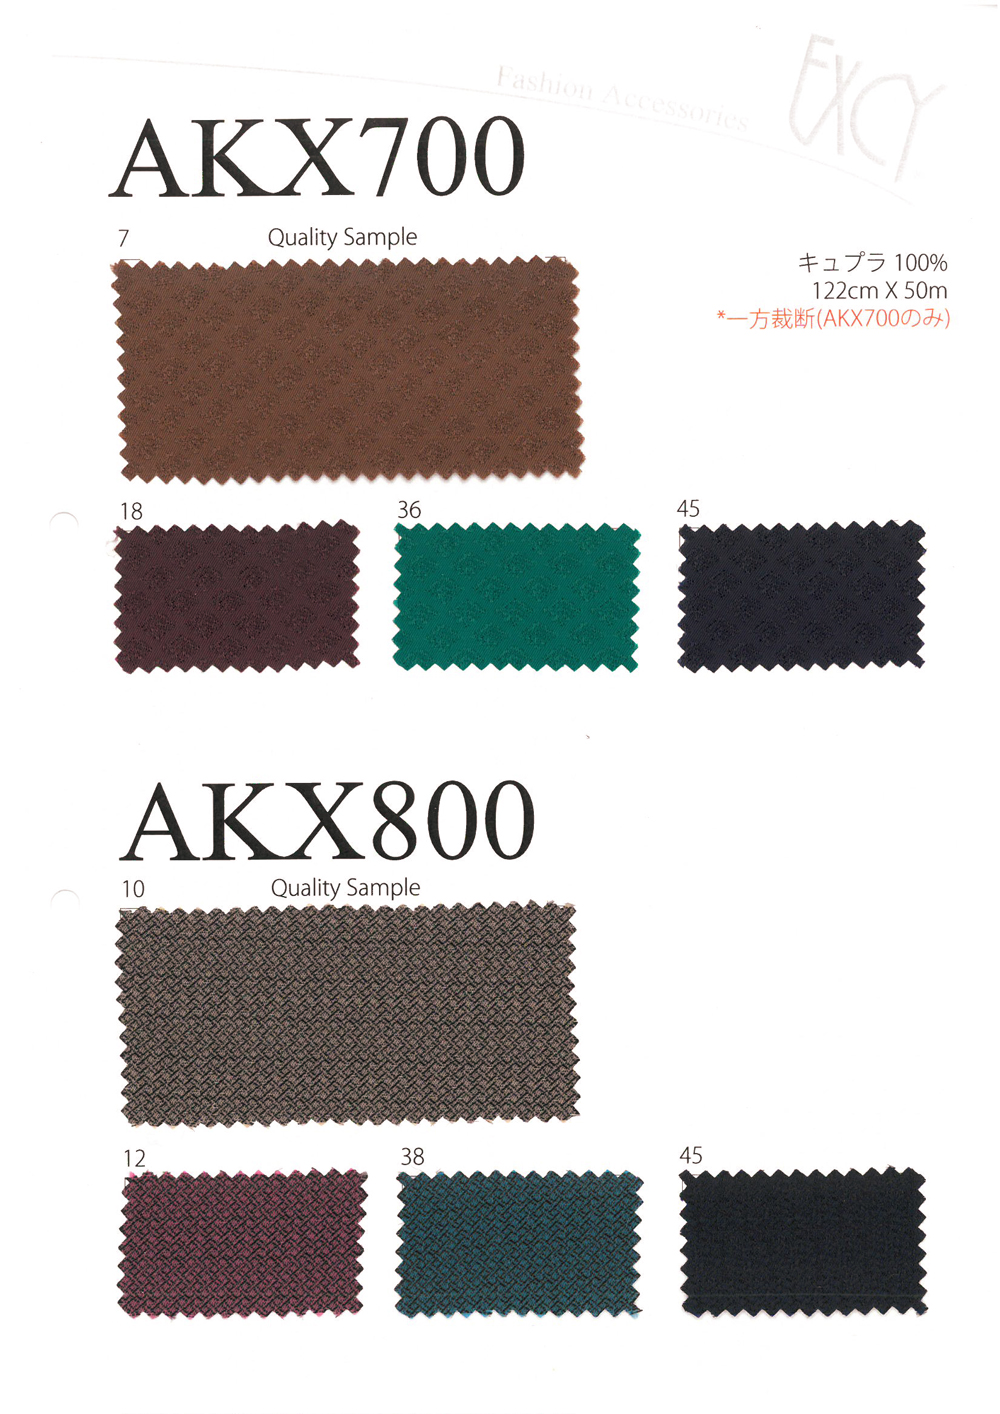 AKX800 几何图案奢华提花里料 旭化成